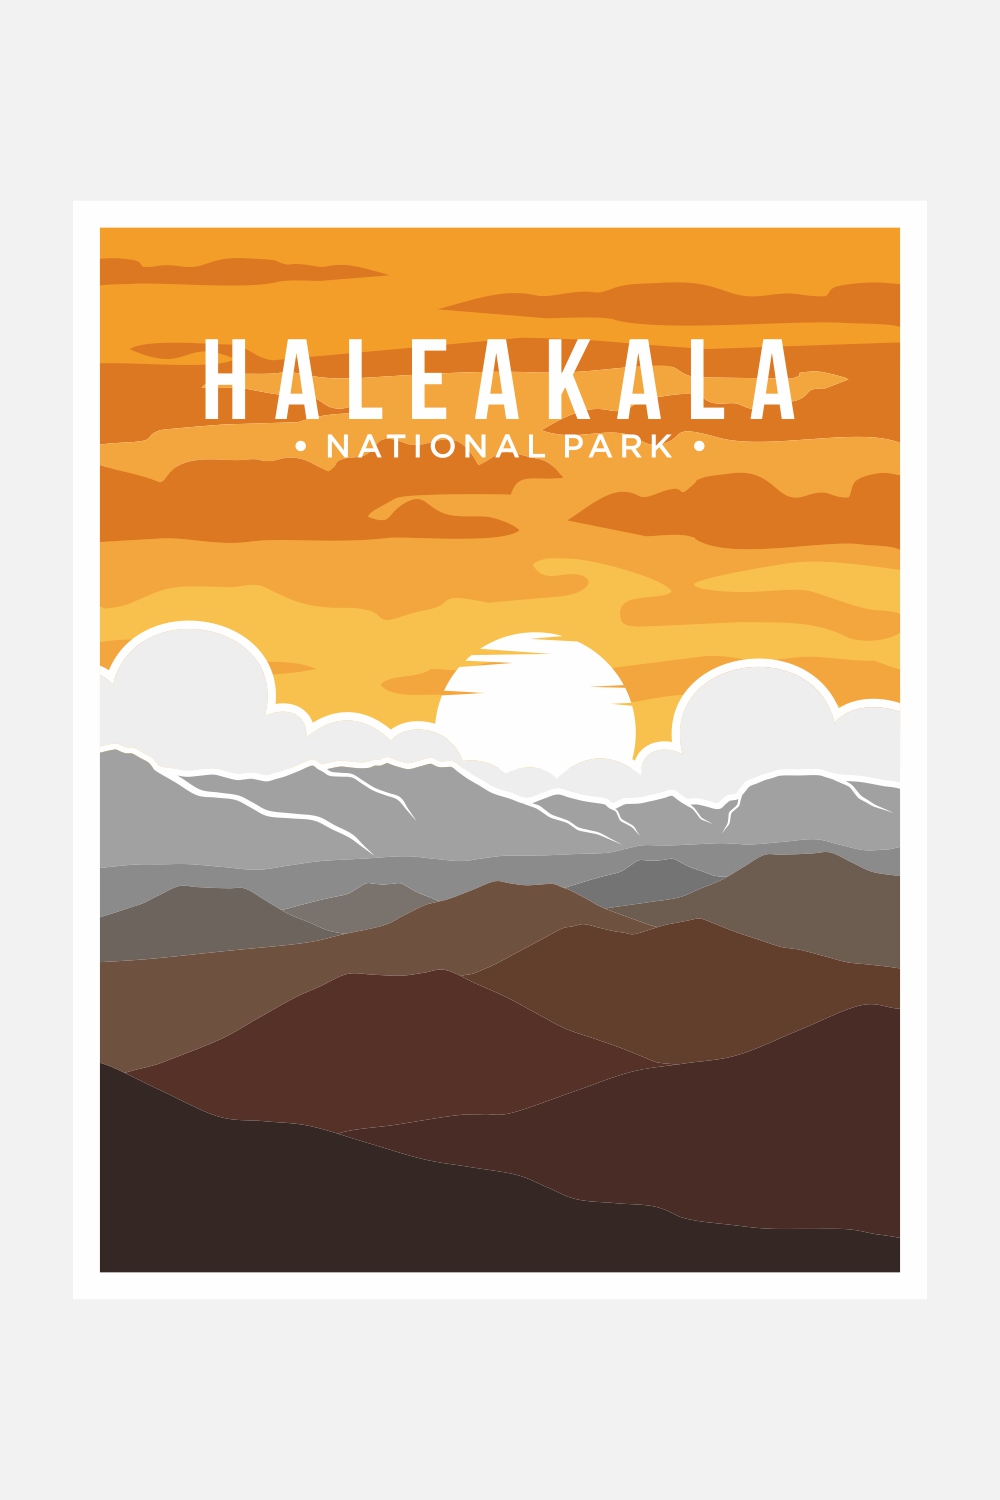 Haleakala National Park poster vector illustration design – Only $8 pinterest preview image.